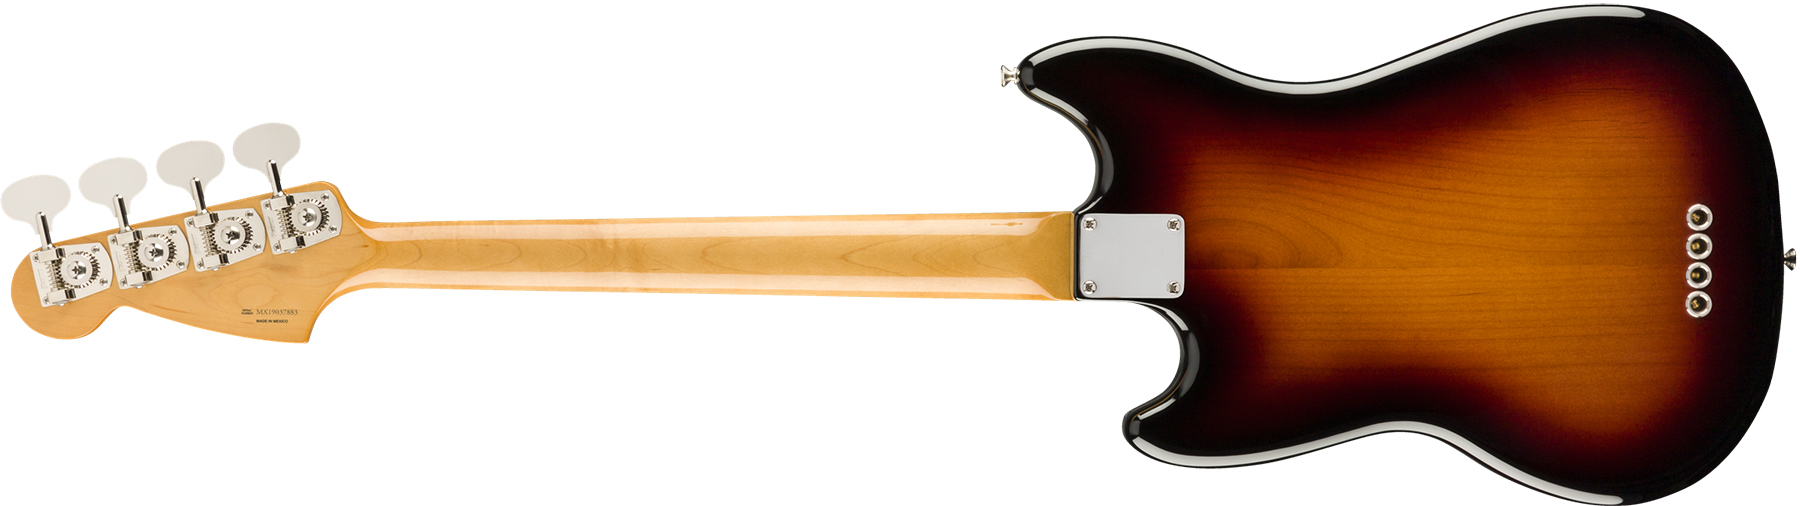 Fender Mustang Bass 60s Vintera Vintage Mex Pf - 3-color Sunburst - Basse Électrique Enfants - Variation 1